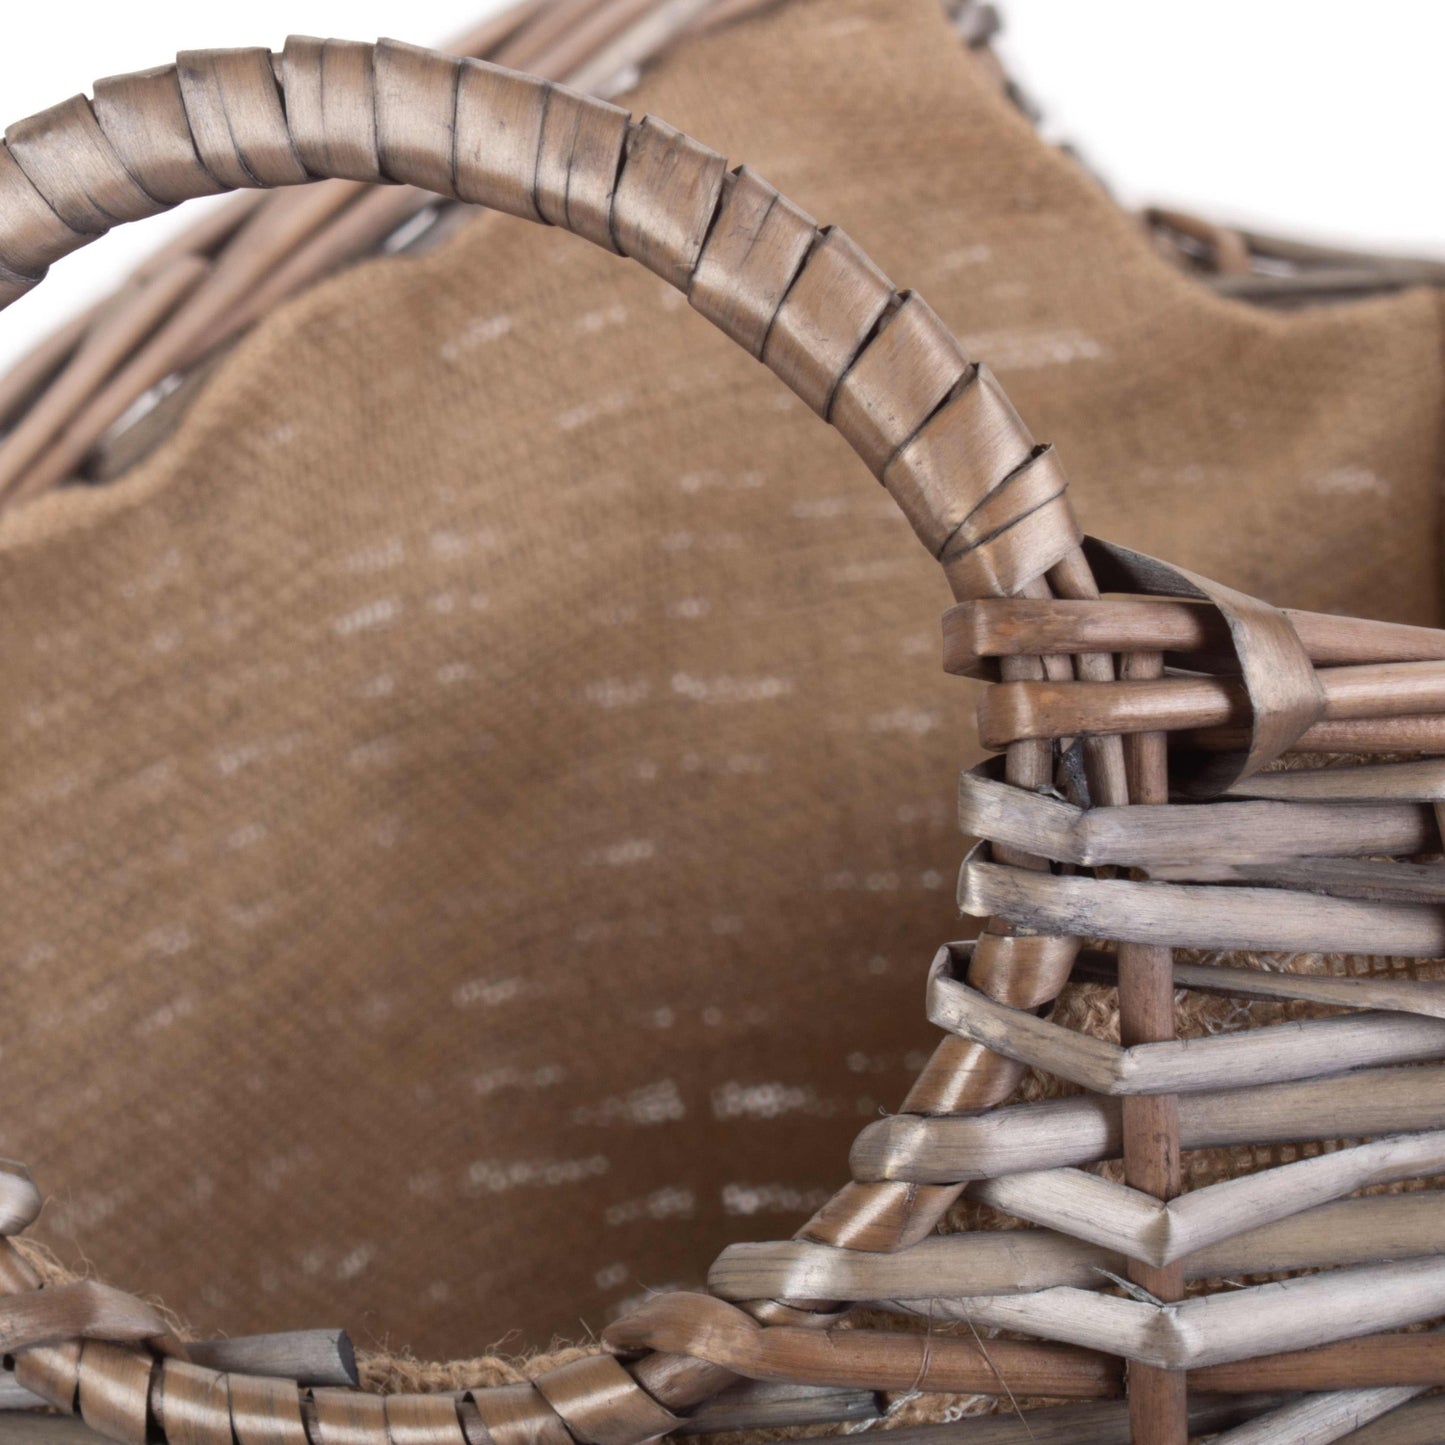 Medium Scoop Neck Antique Wash Hessian Lined Basket